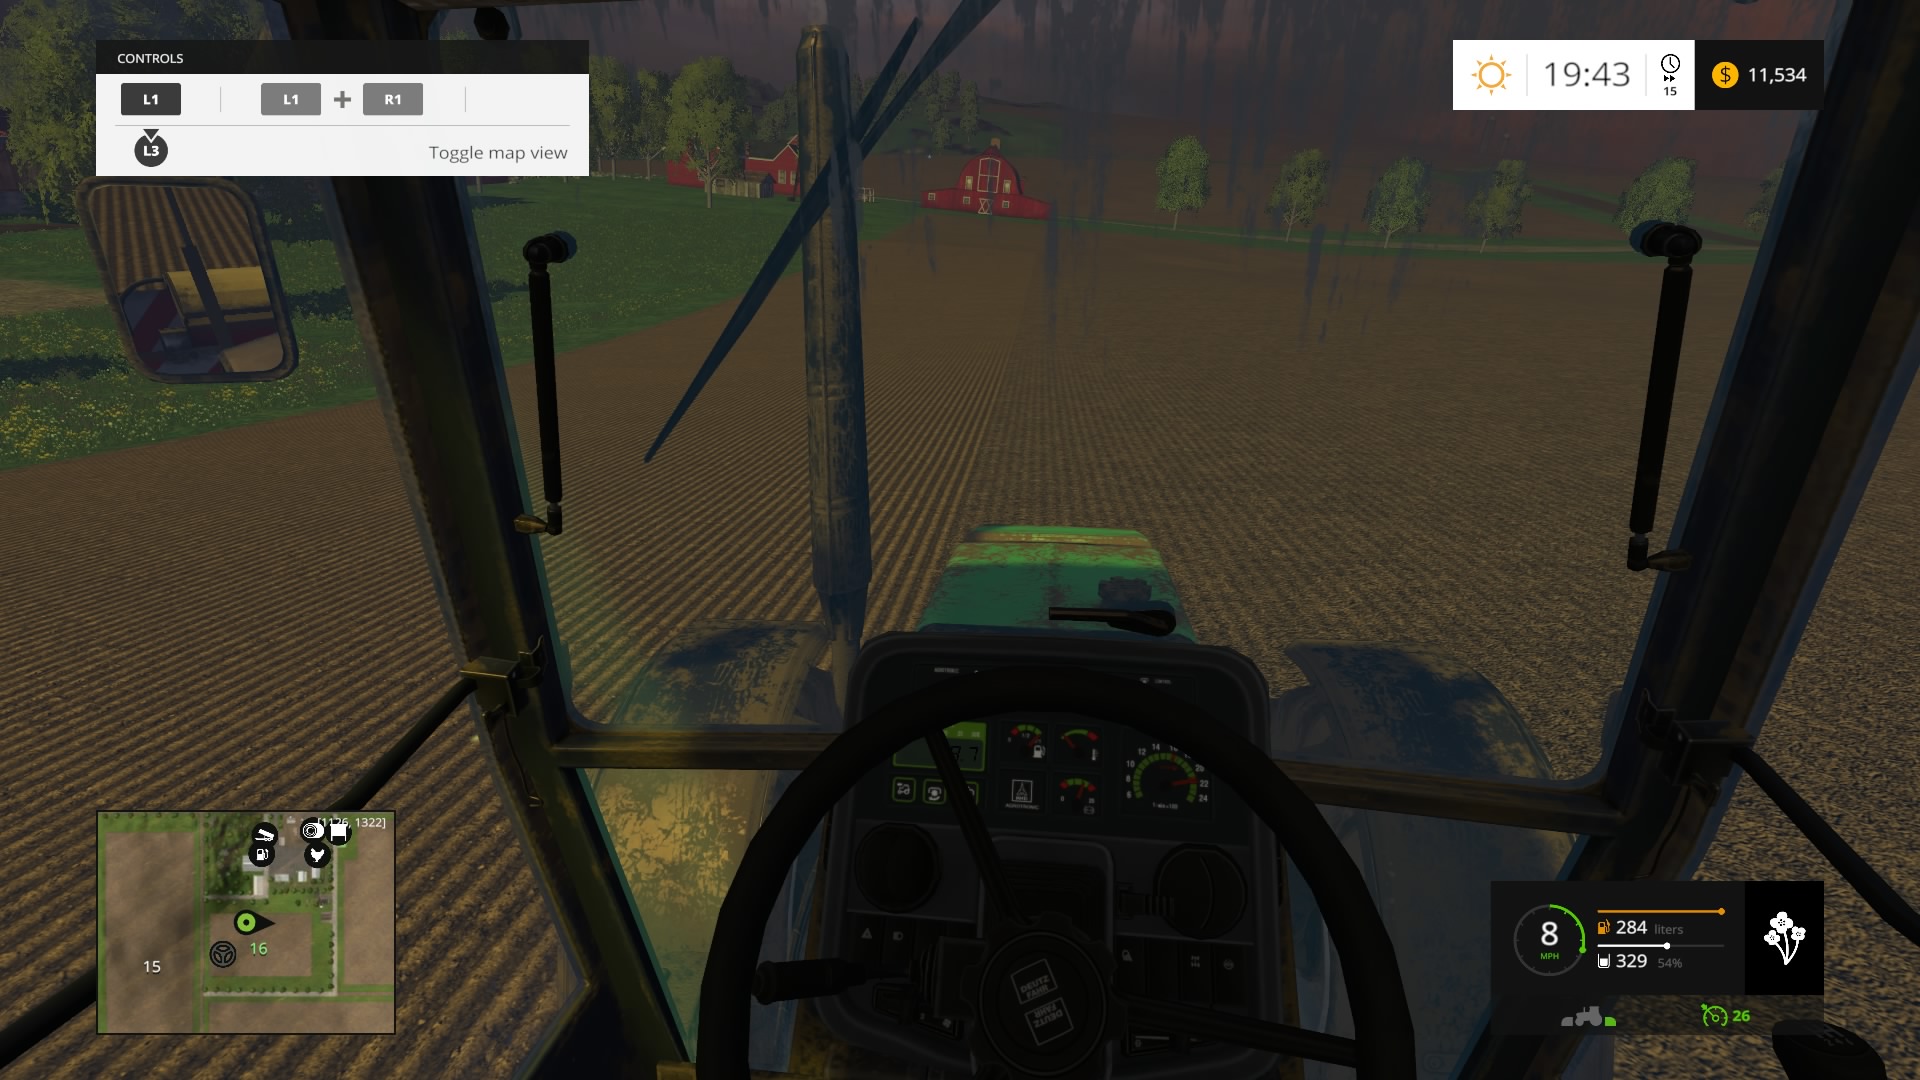 Farming Simulator 15 Review